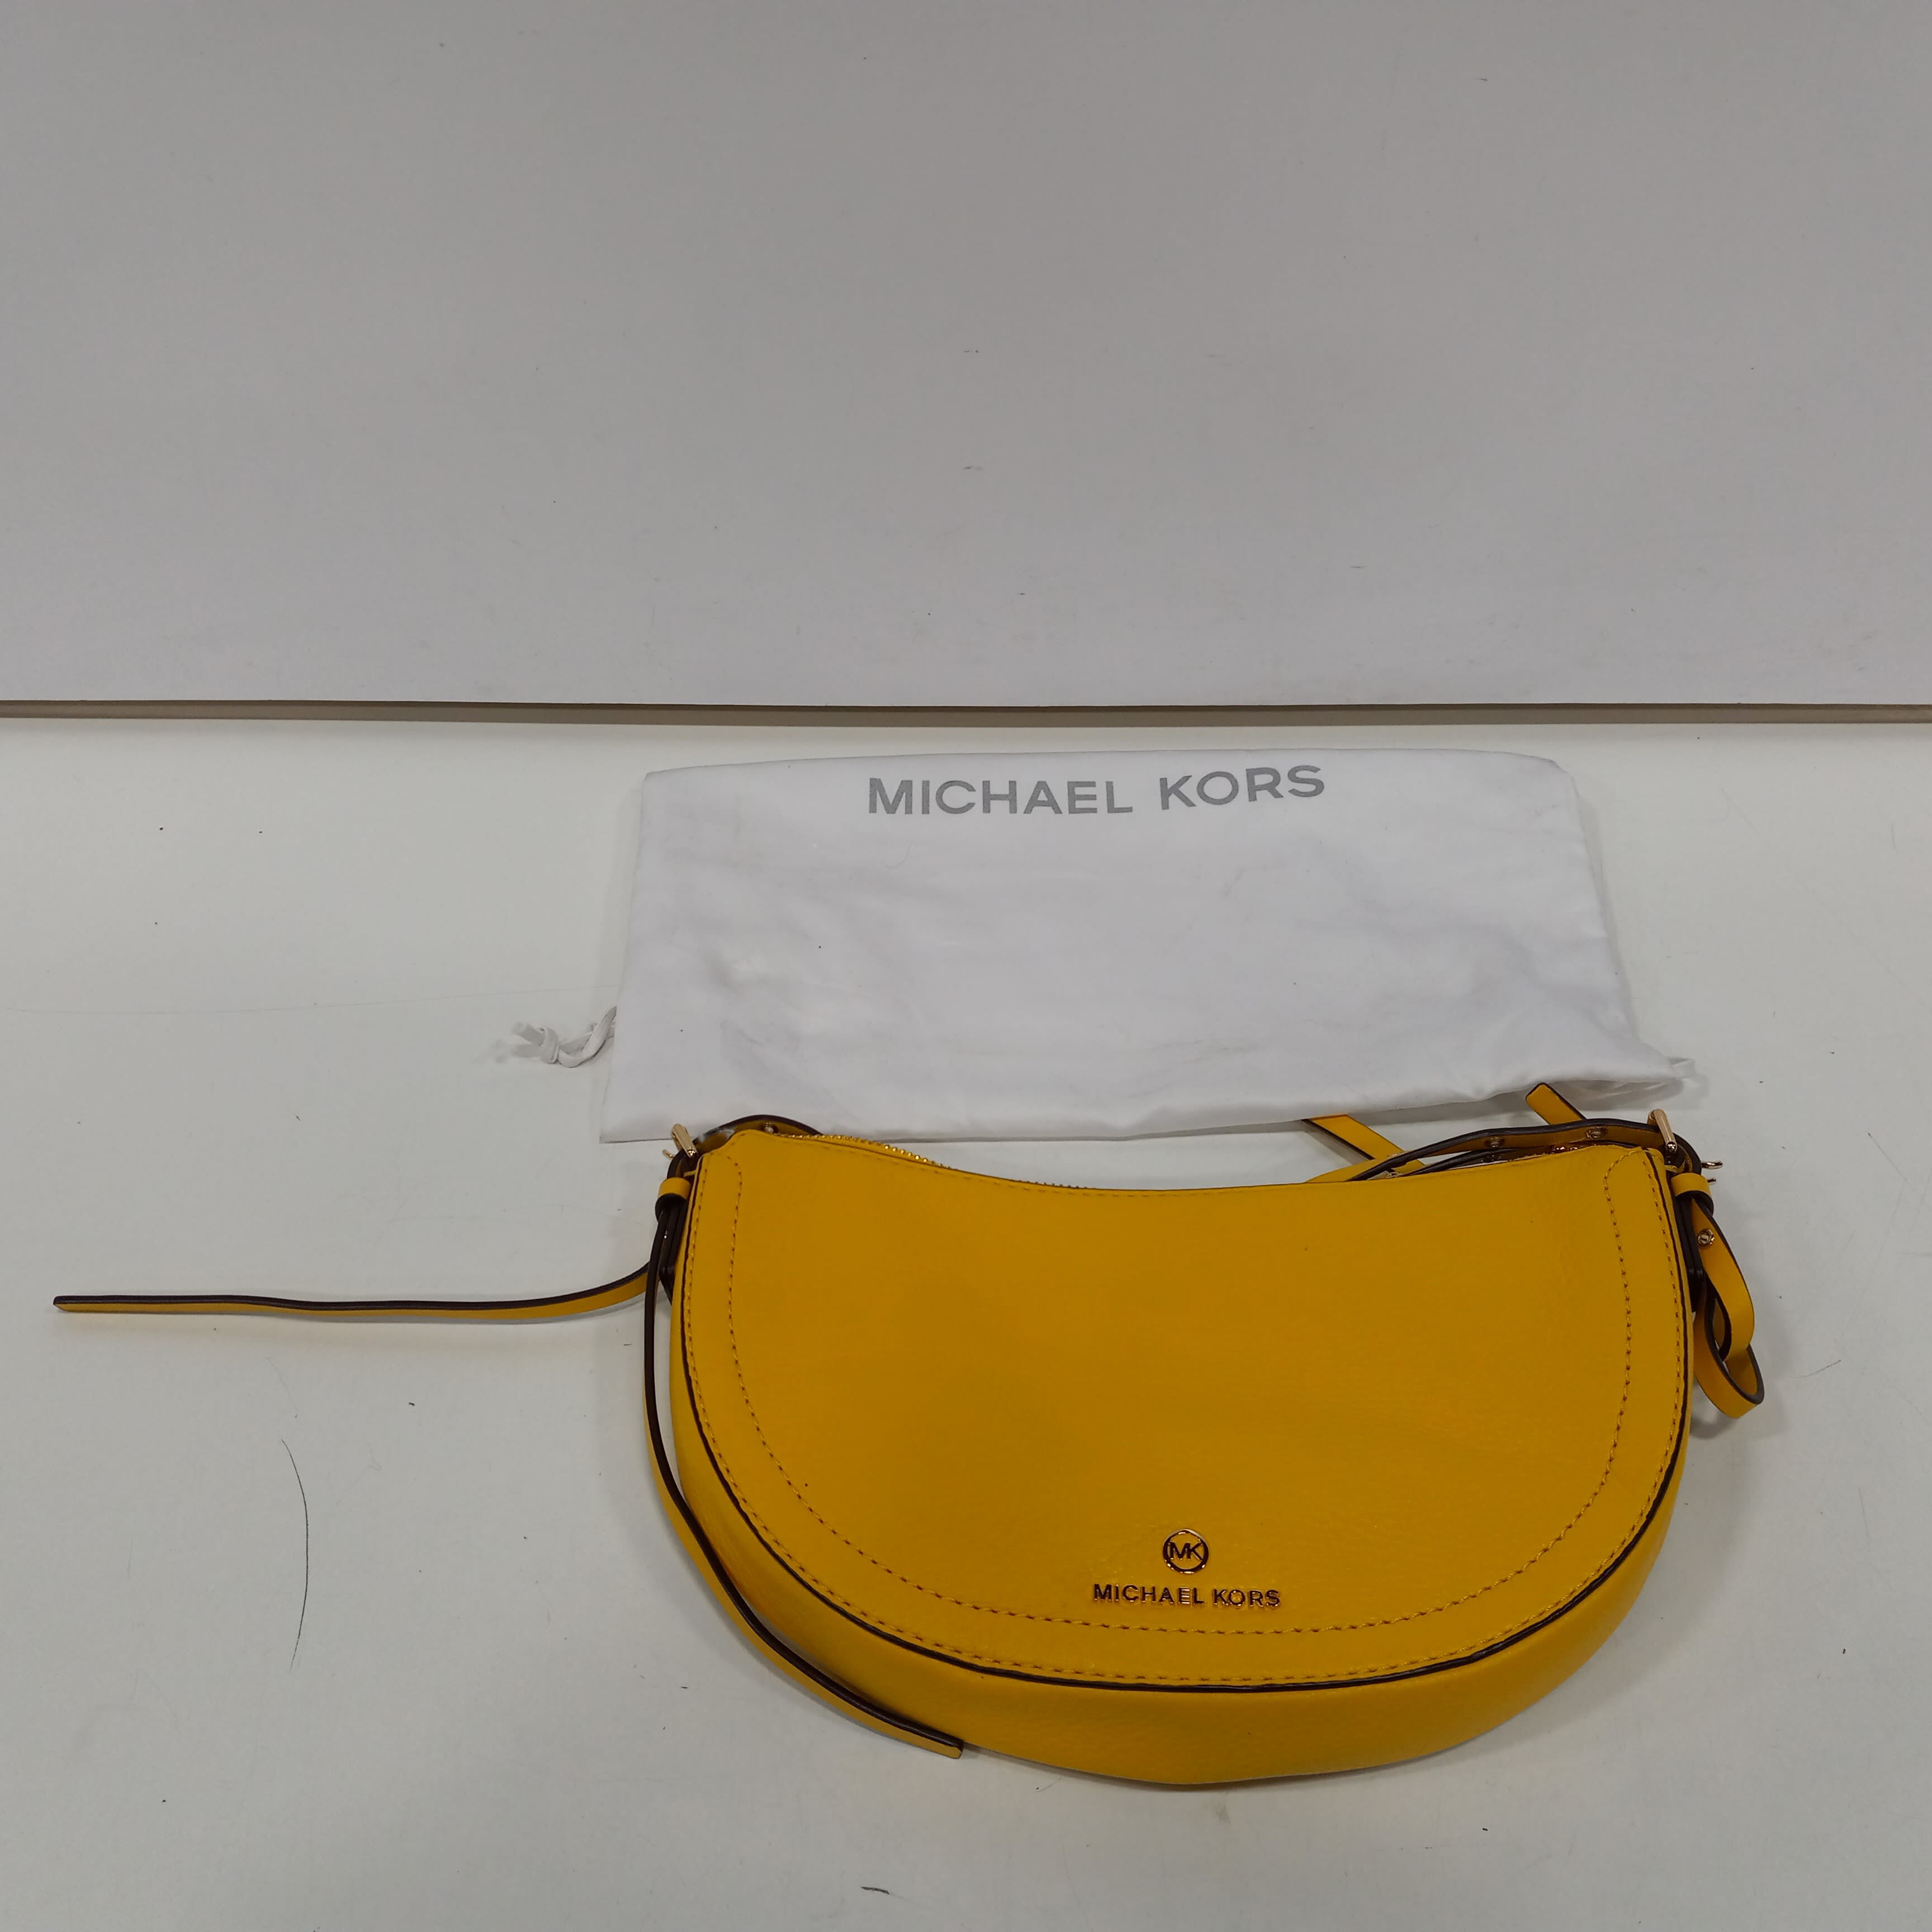 Michael Kors Jet Set Travel Leather XS Carryall Zip Convertible Tote  Satchel Bag, Jasmine Yellow Mlt: Amazon.co.uk: Fashion